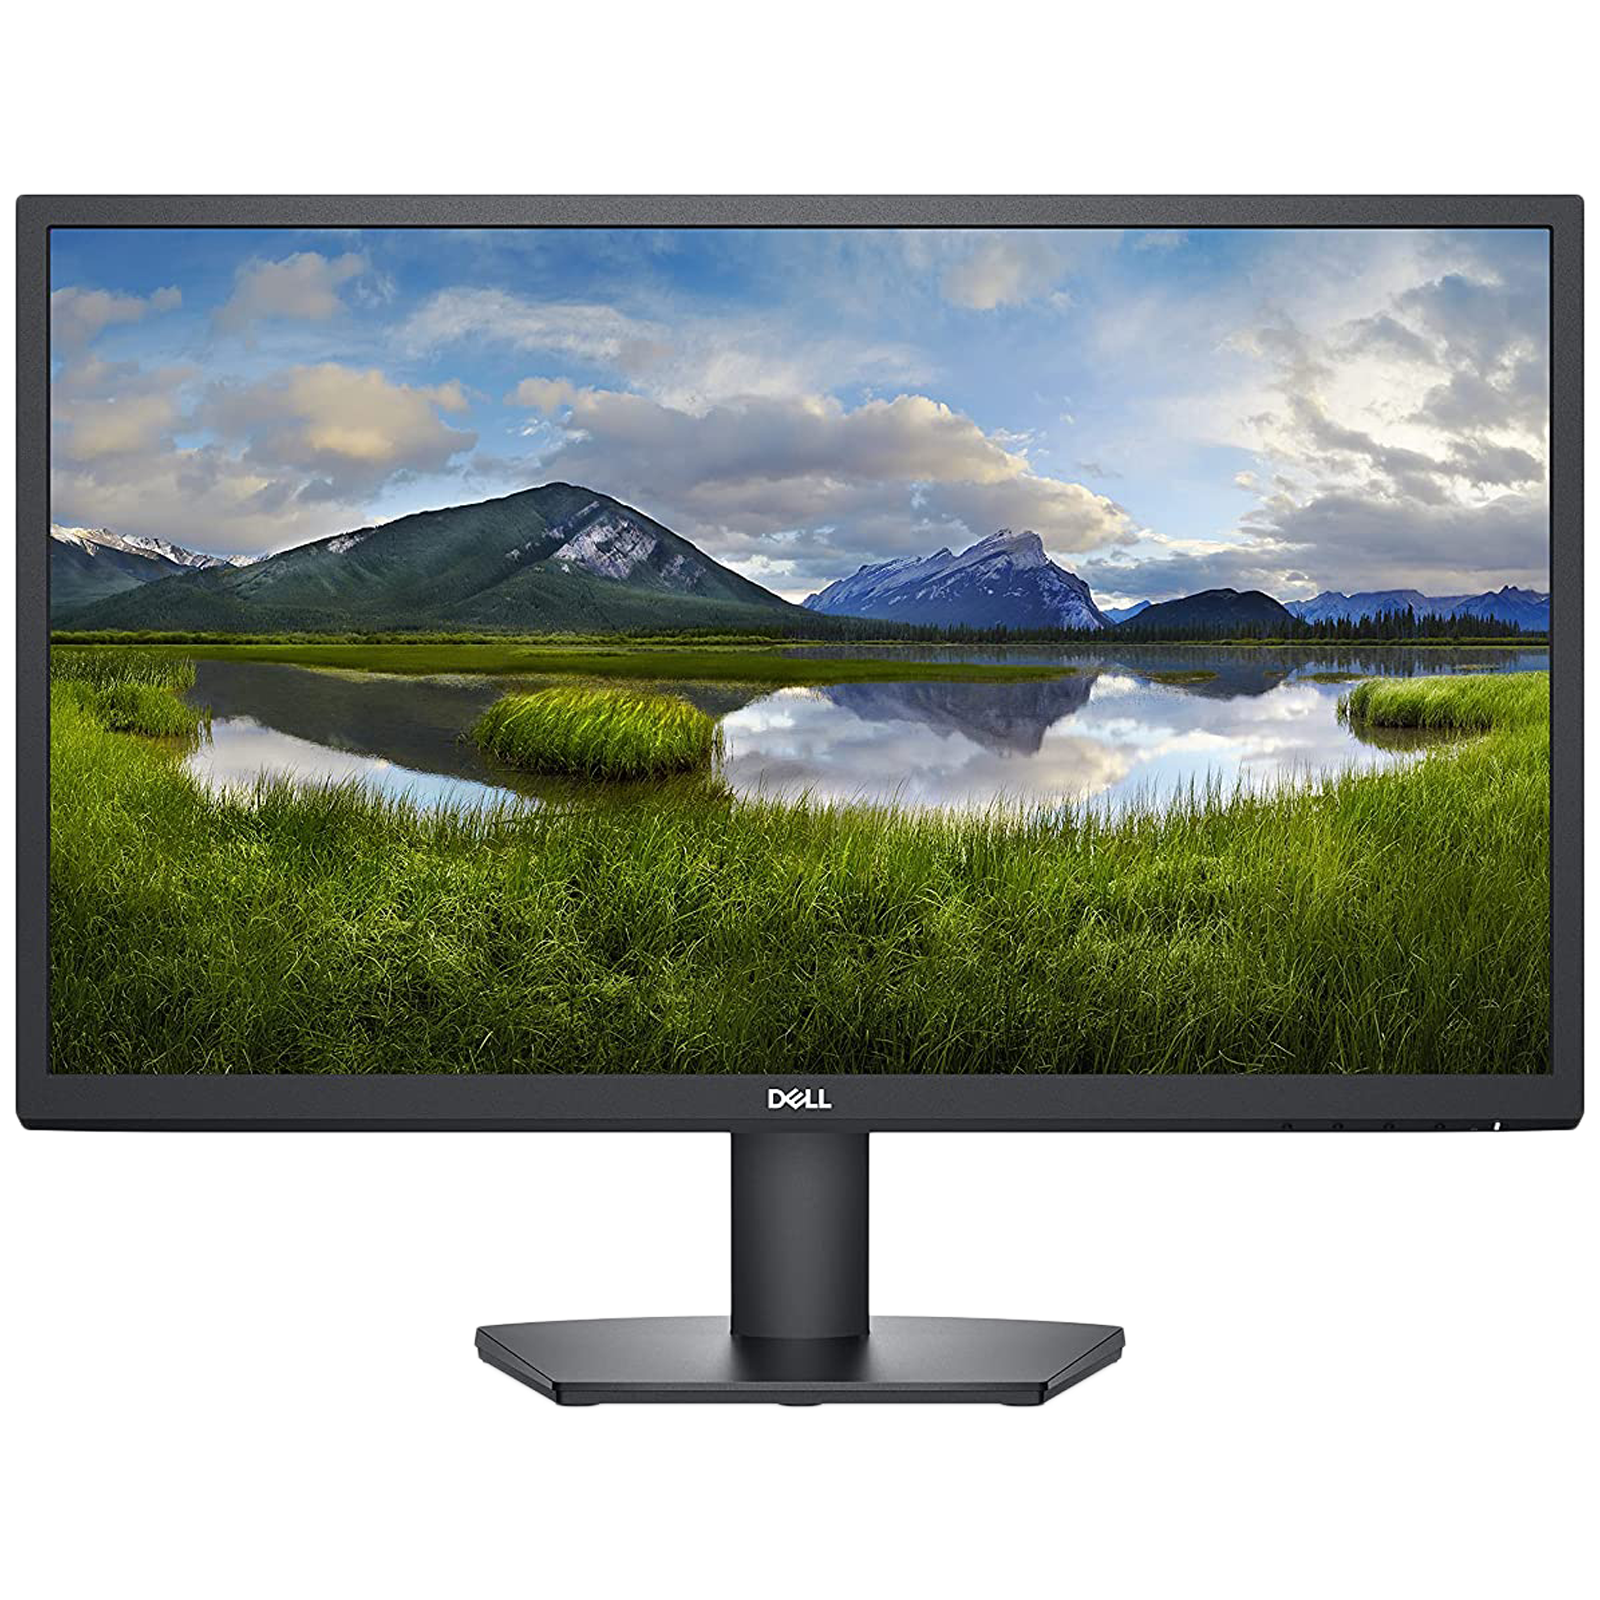 Dell SE2422H 60.96cm (24 Inches) Full HD Flat Panel Monitor (AMD FreeSync Technology, VGA + HDMI, 75 Hz, 210-AZGV, Black)_1